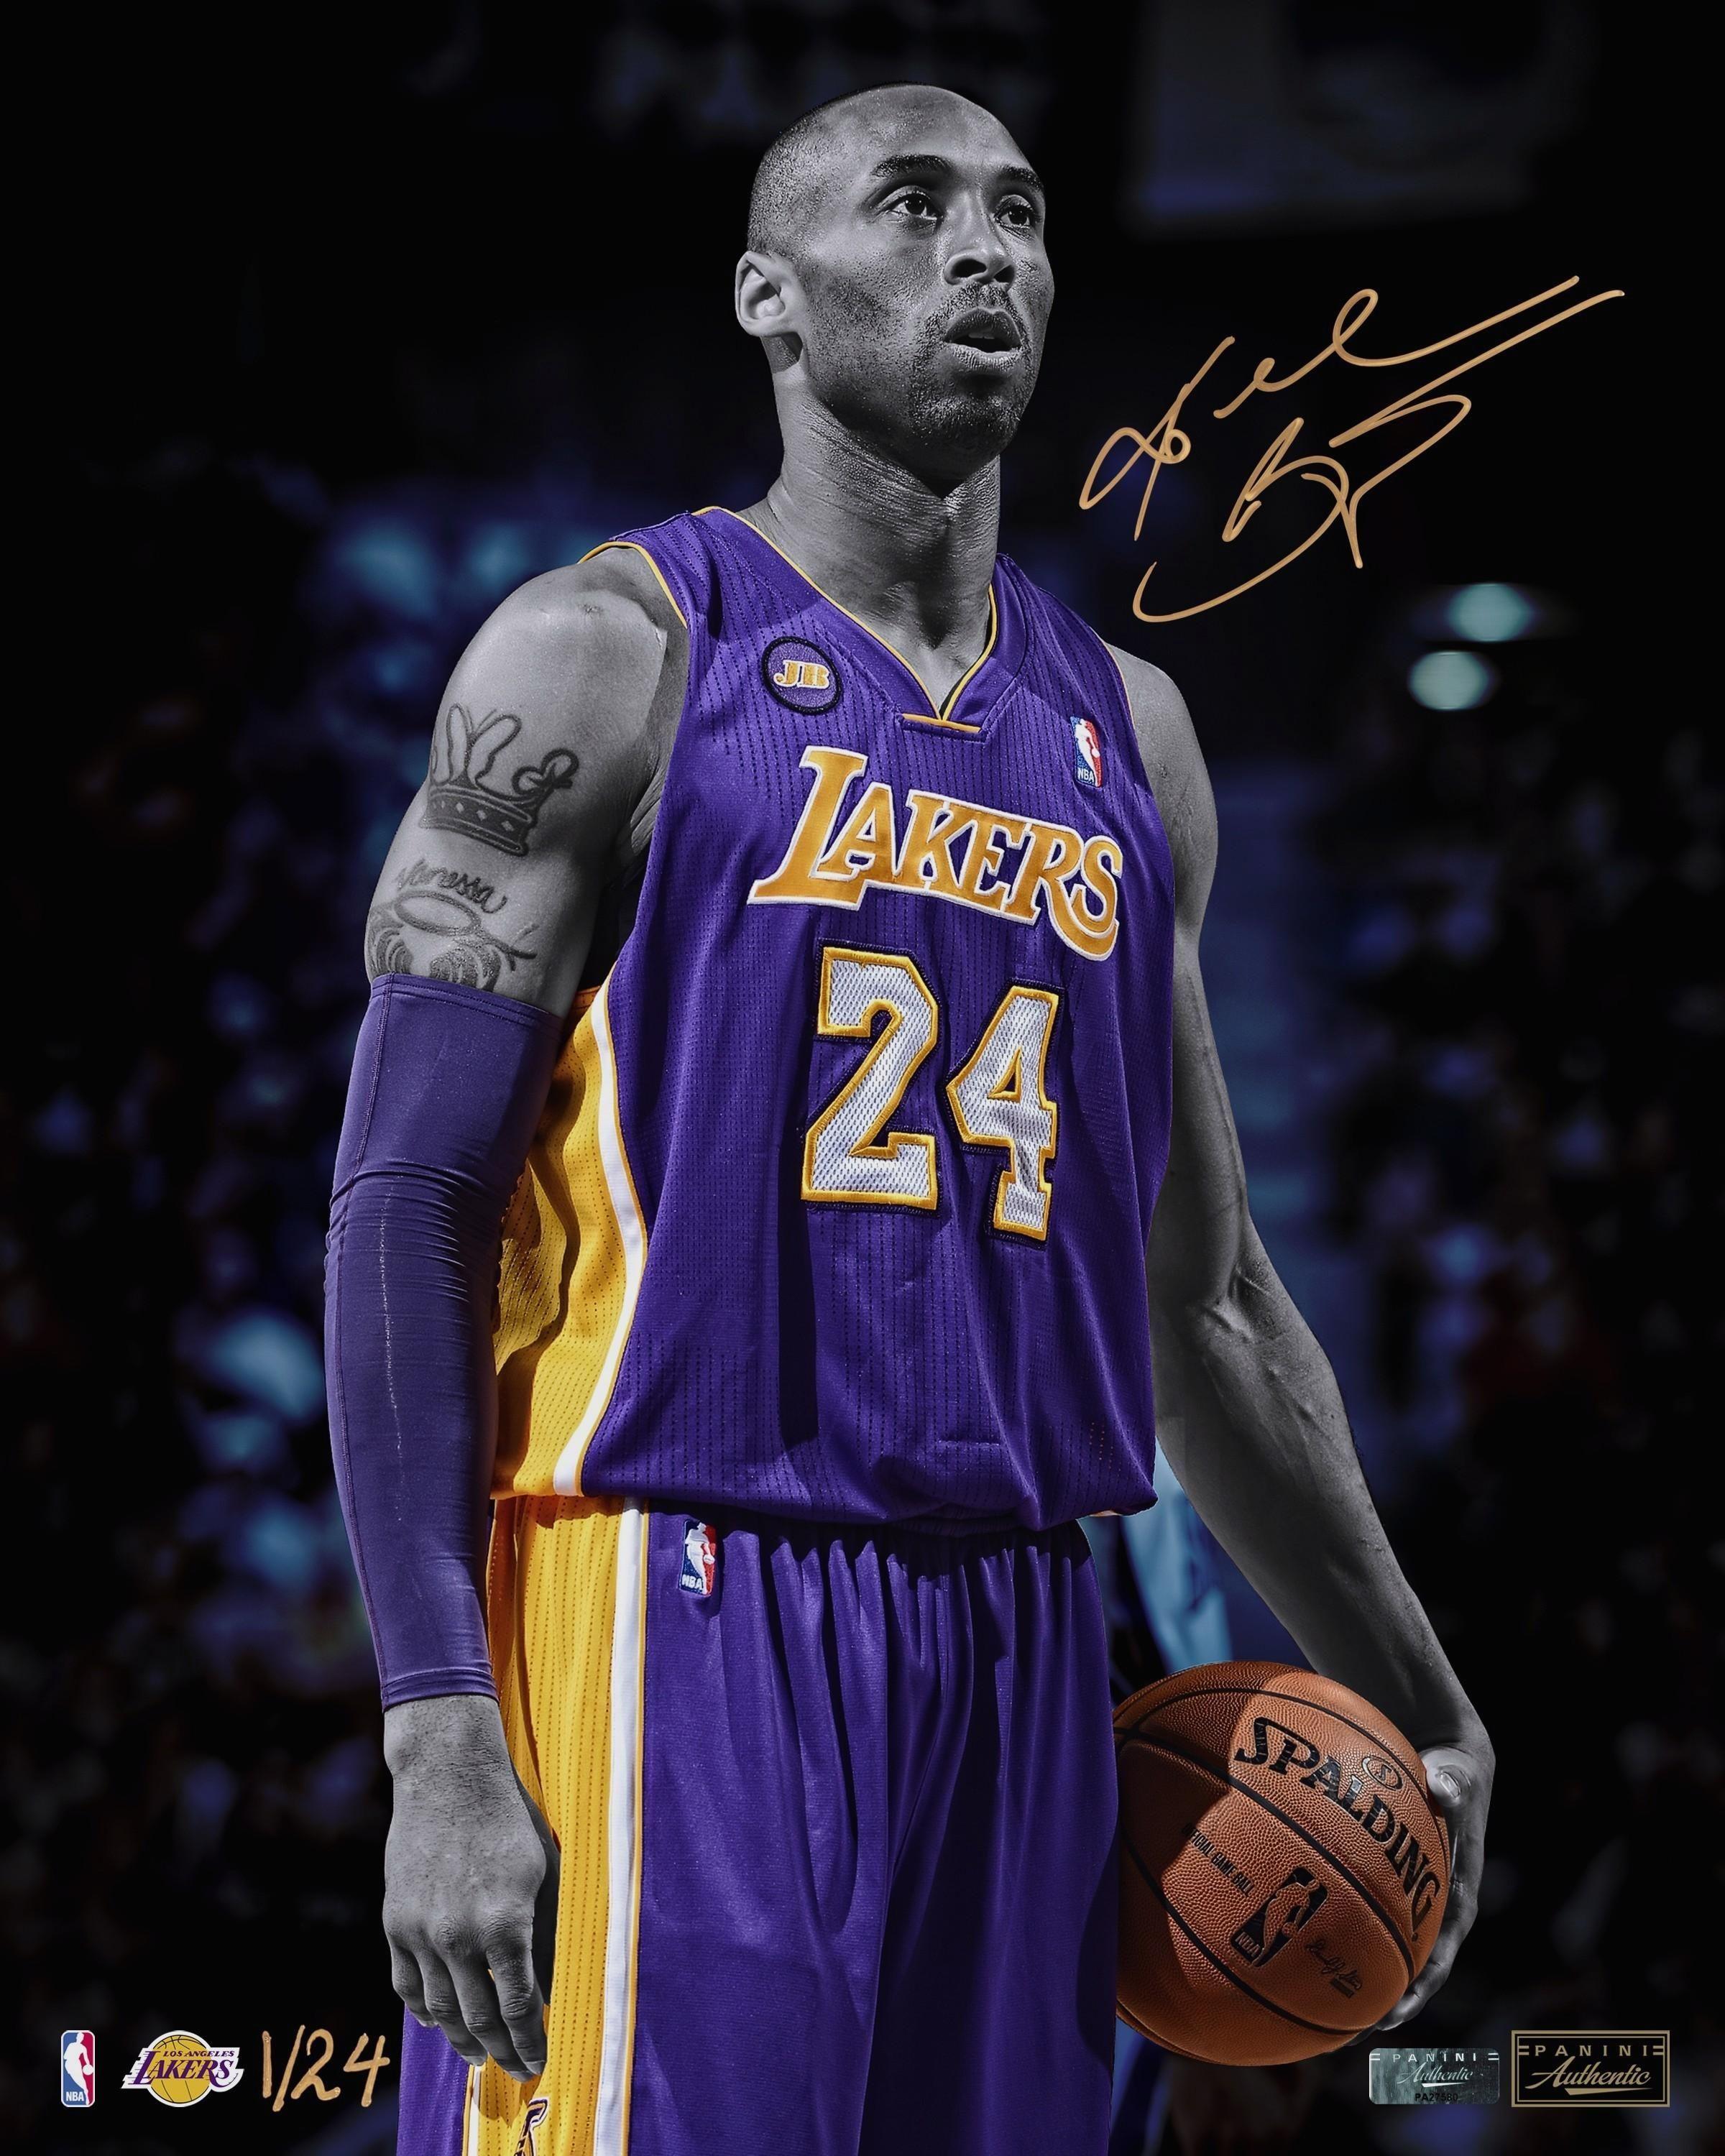 Aesthetic Kobe Bryant Wallpaper Free Aesthetic Kobe Bryant